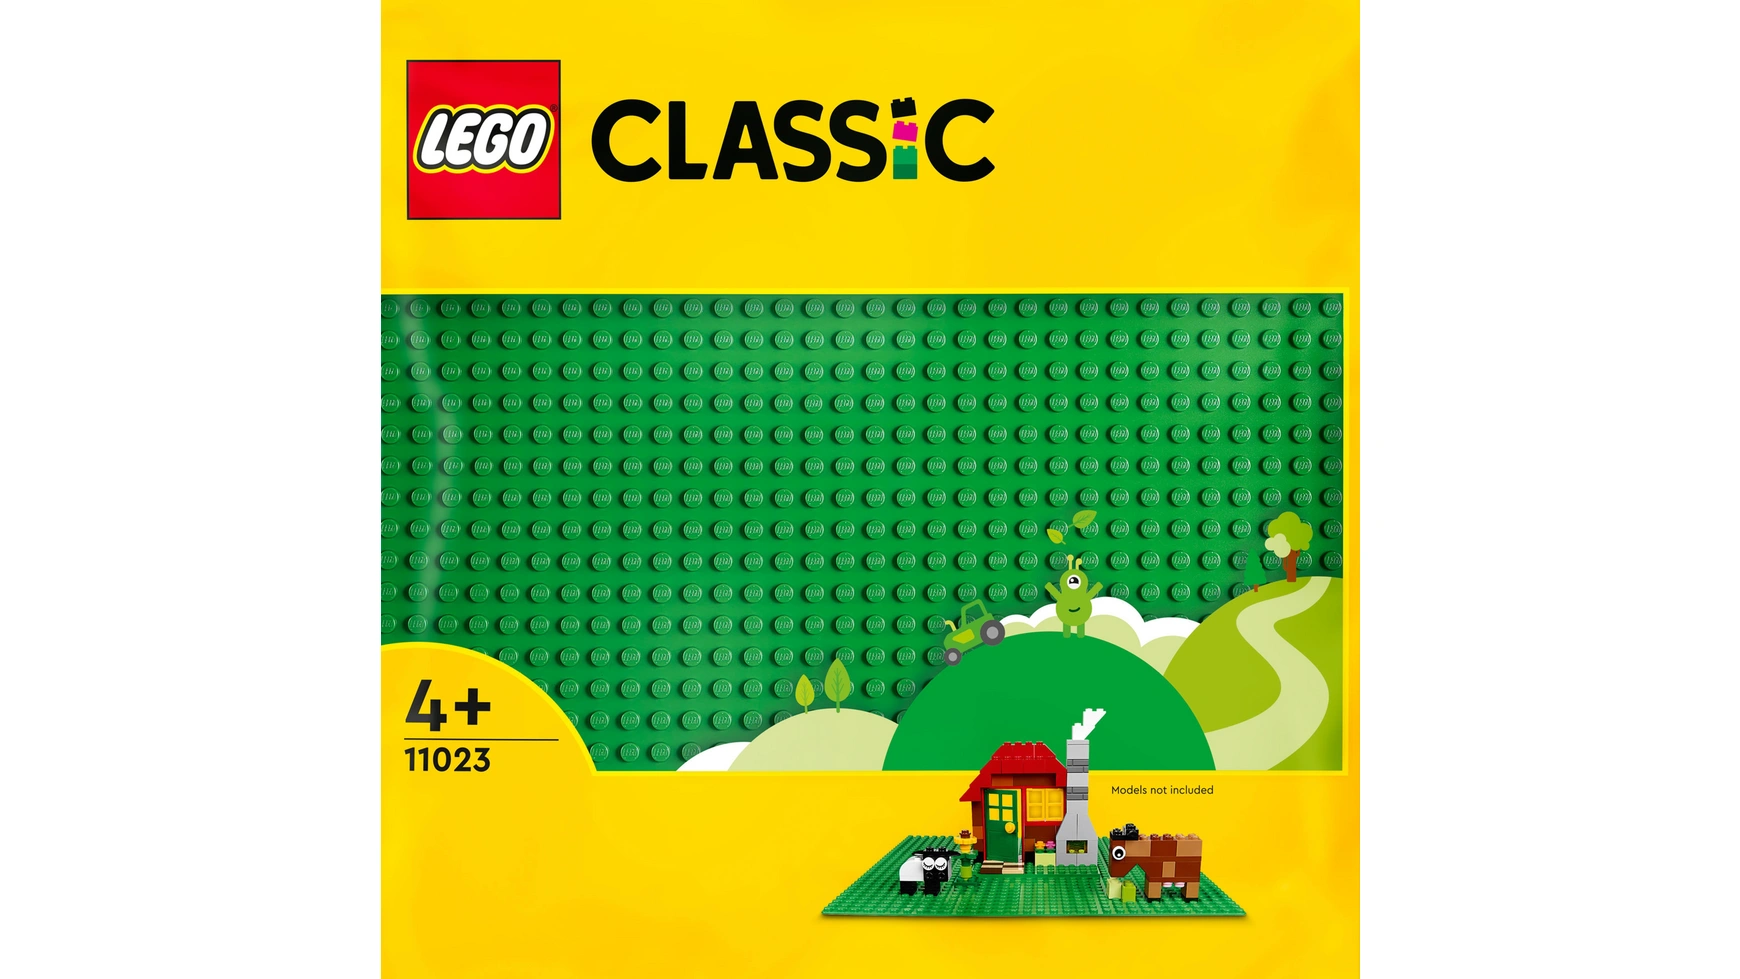 Lego Classic Зеленая строительная пластина, опорная плита для наборов Lego, 32x32 lego classic синяя строительная пластина опорная плита для наборов lego 32x32